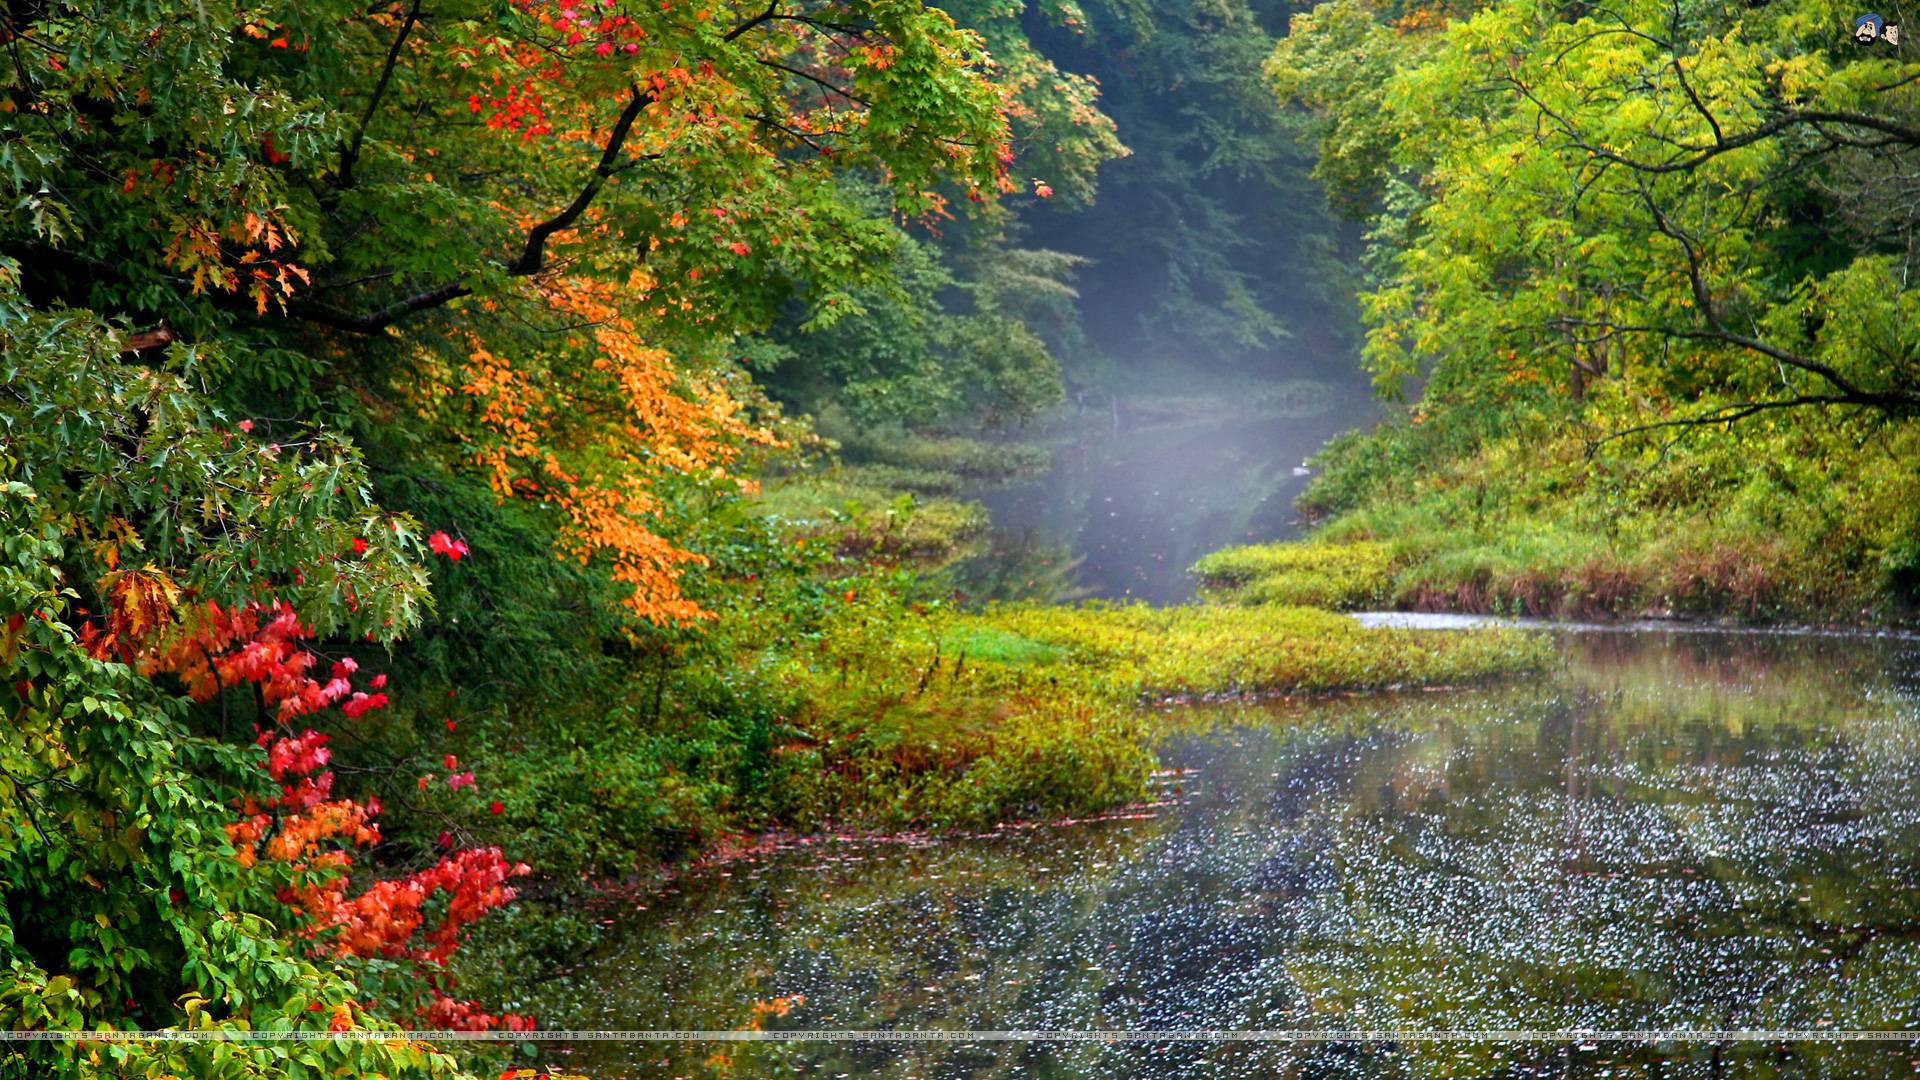 santabanta hd壁紙1080p,自然の風景,自然,水域,木,葉